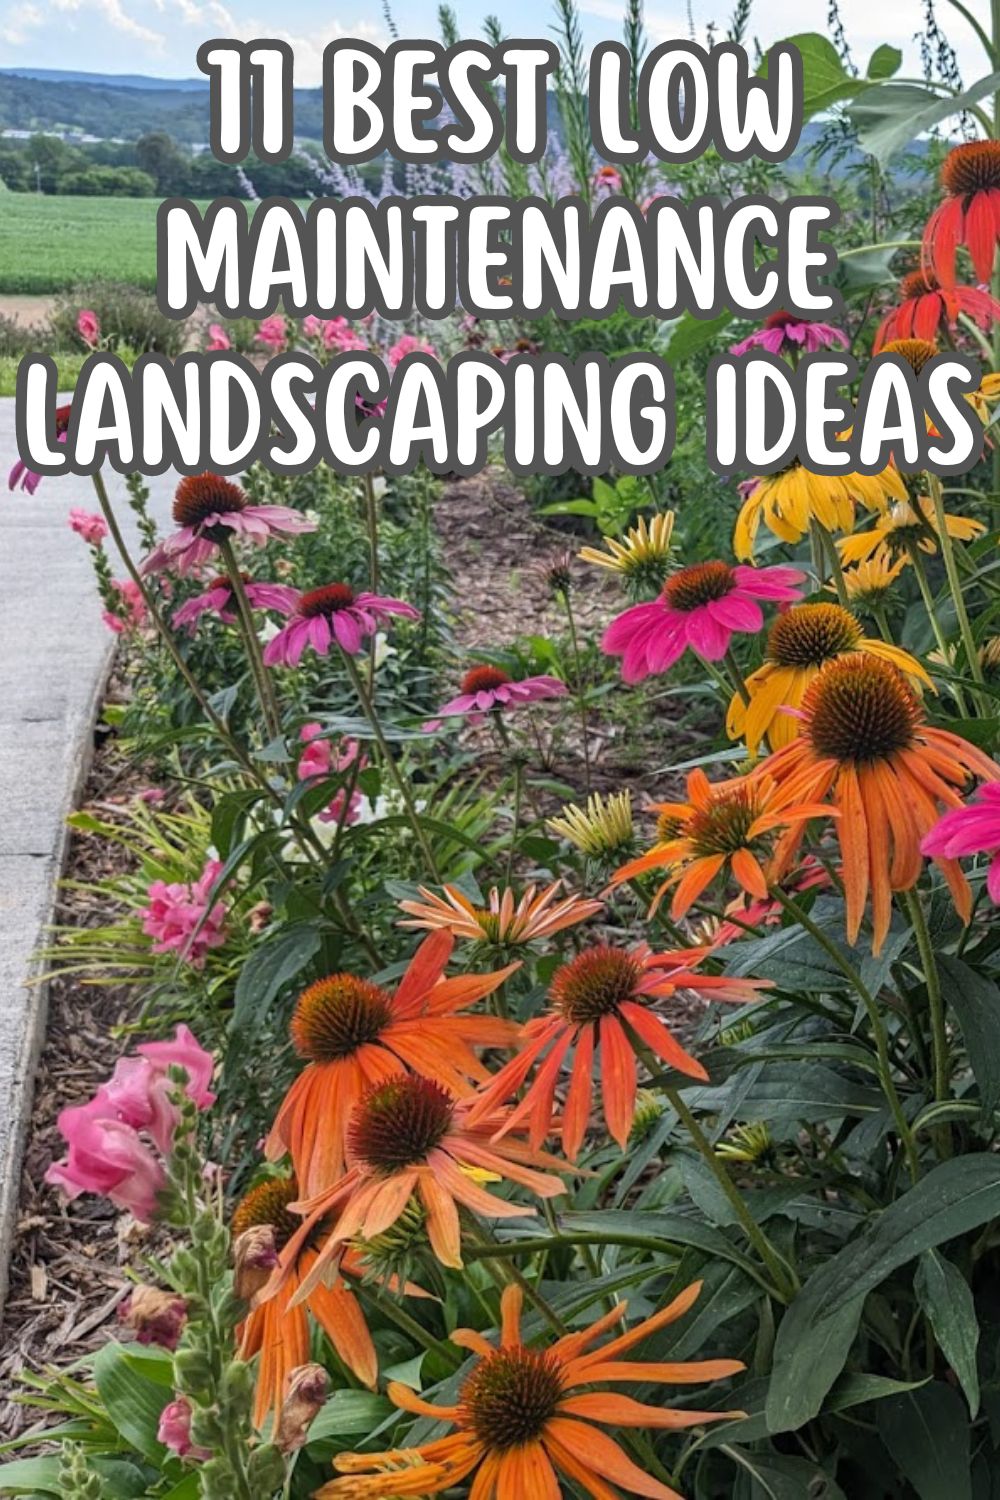 11 best low maintenance landscaping ideas.